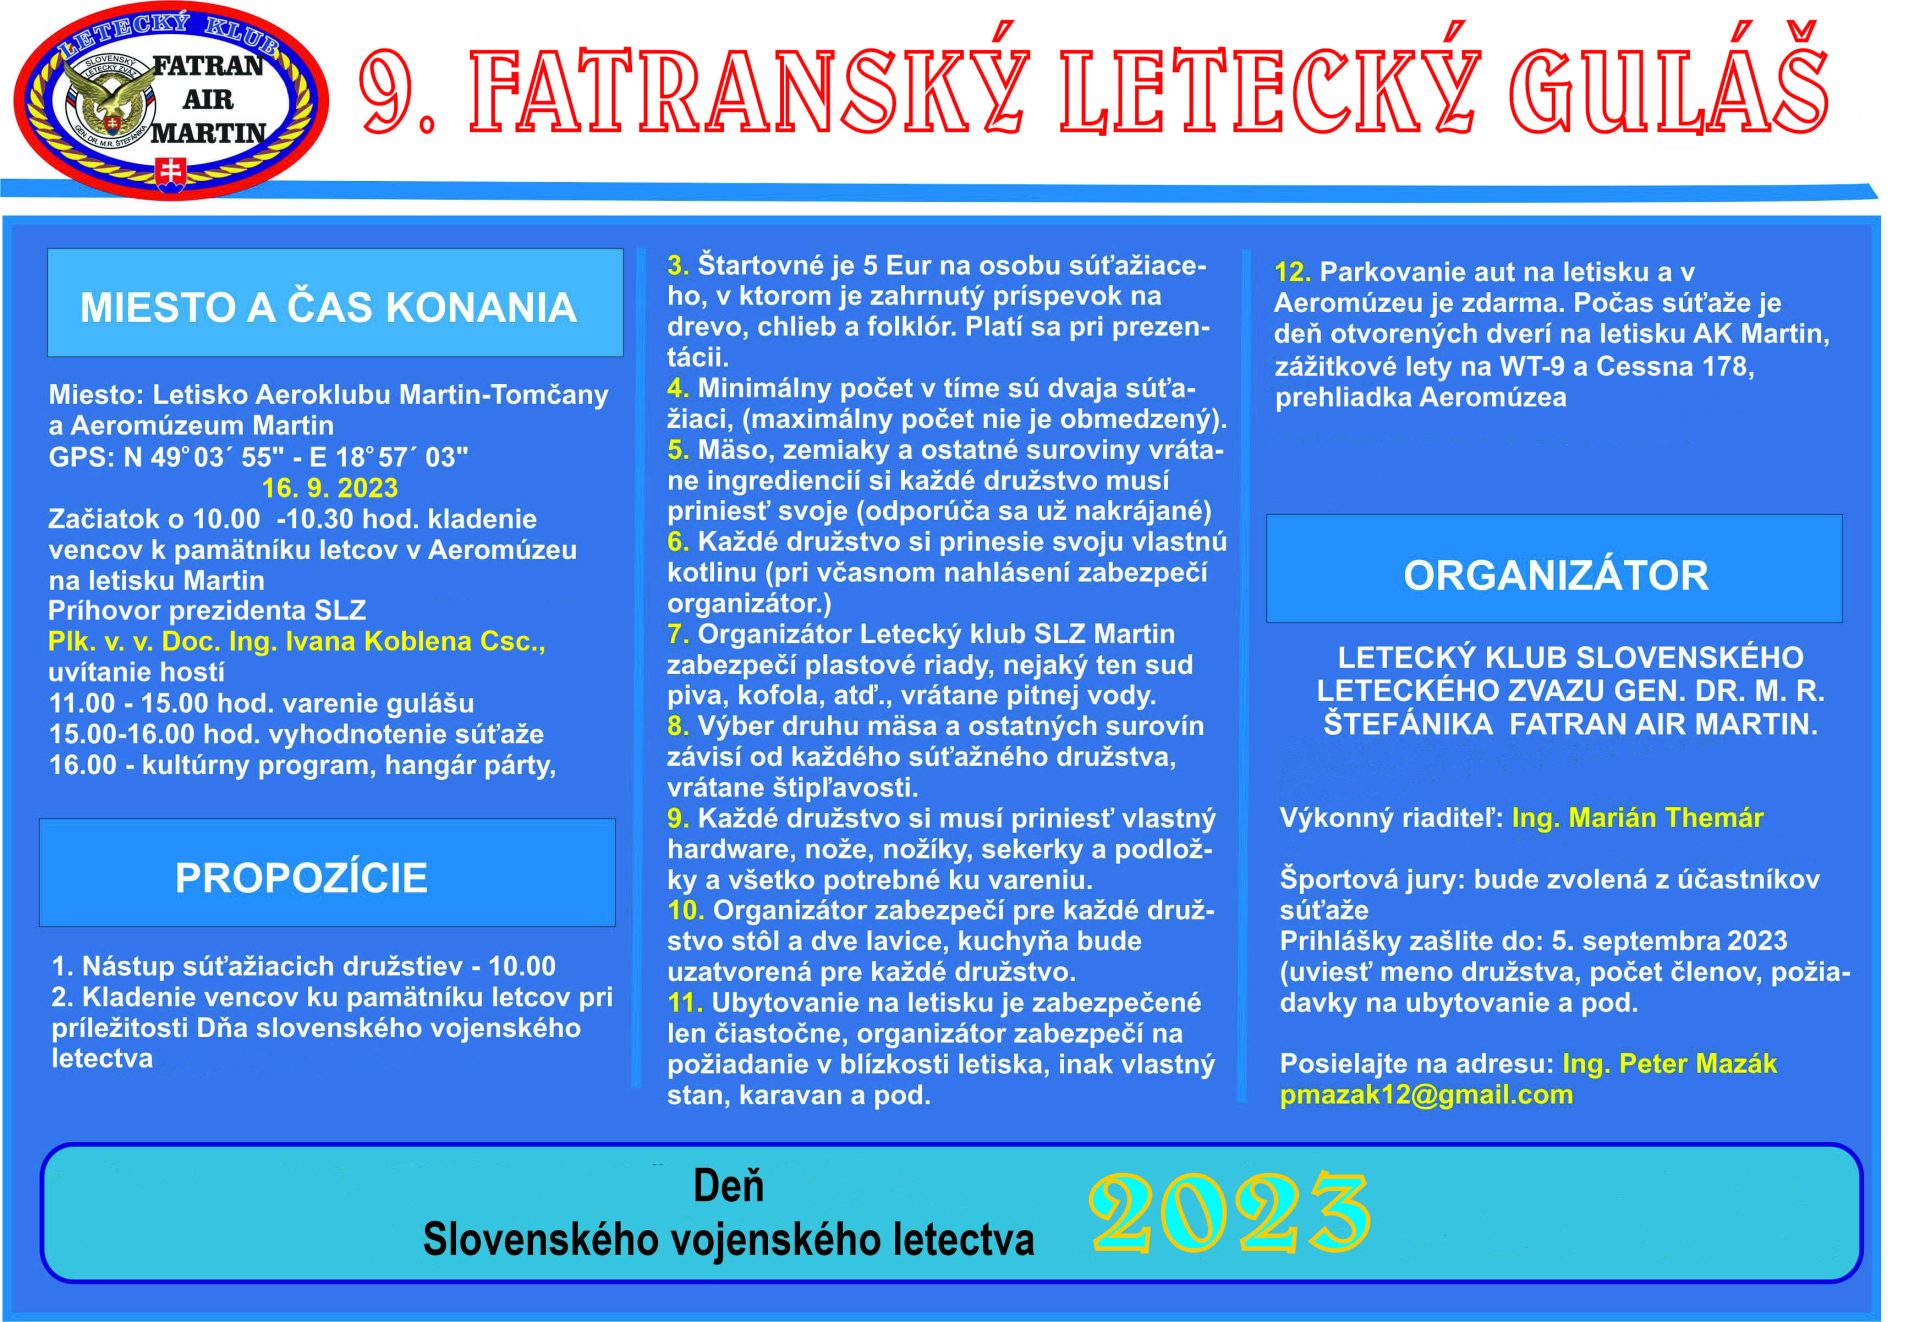 Propozície k ucasti_Fatransky letecky gulas_ 2023